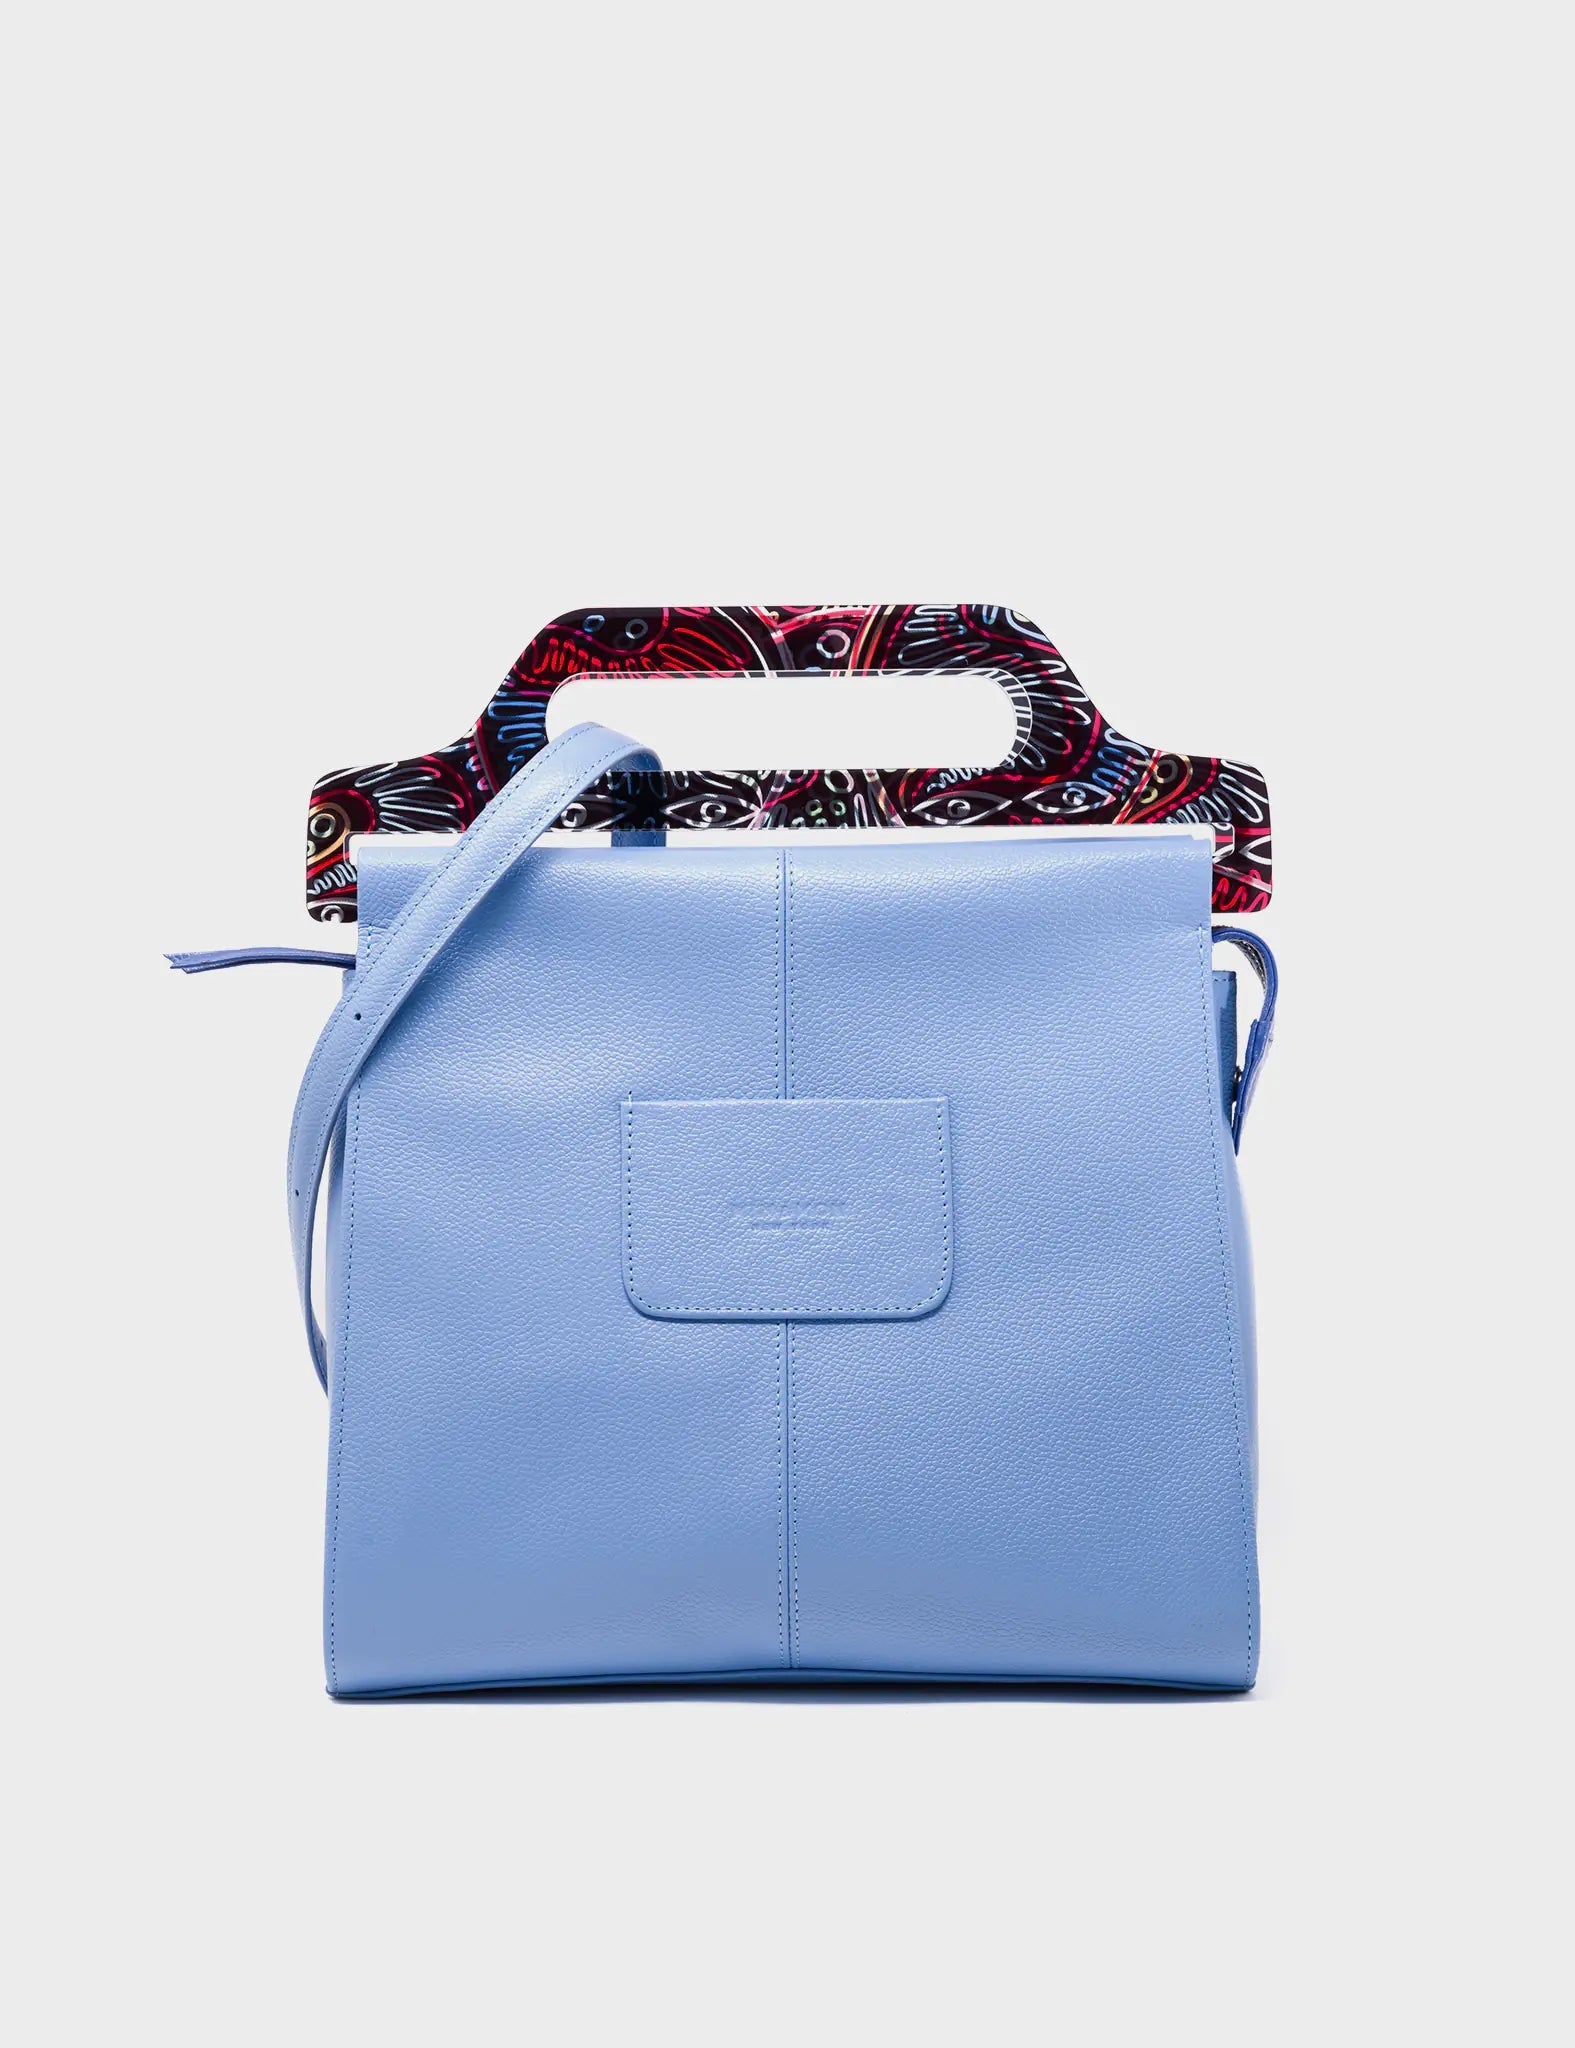 Crossbody Blue Leather Handbag Multicolored Octopus Design - back 